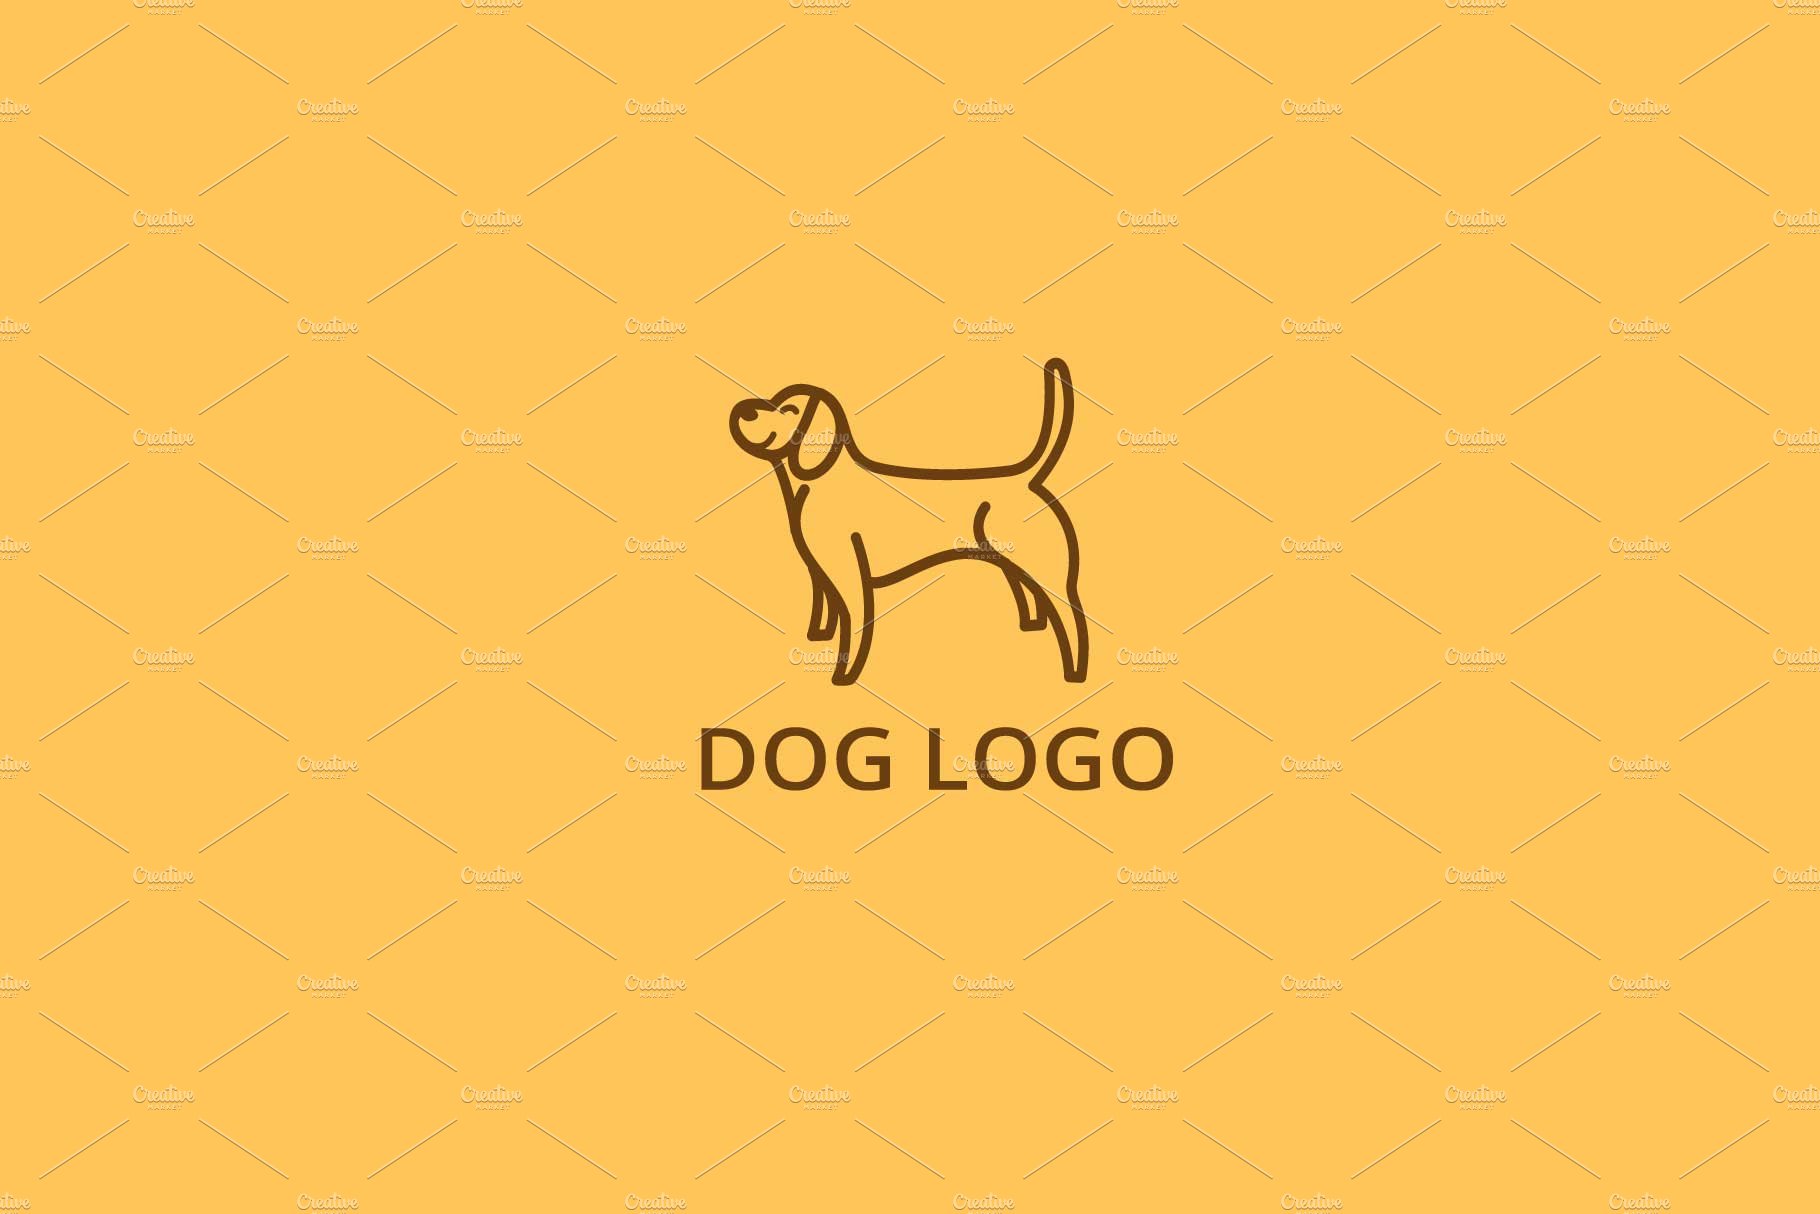 dog logo preview image.